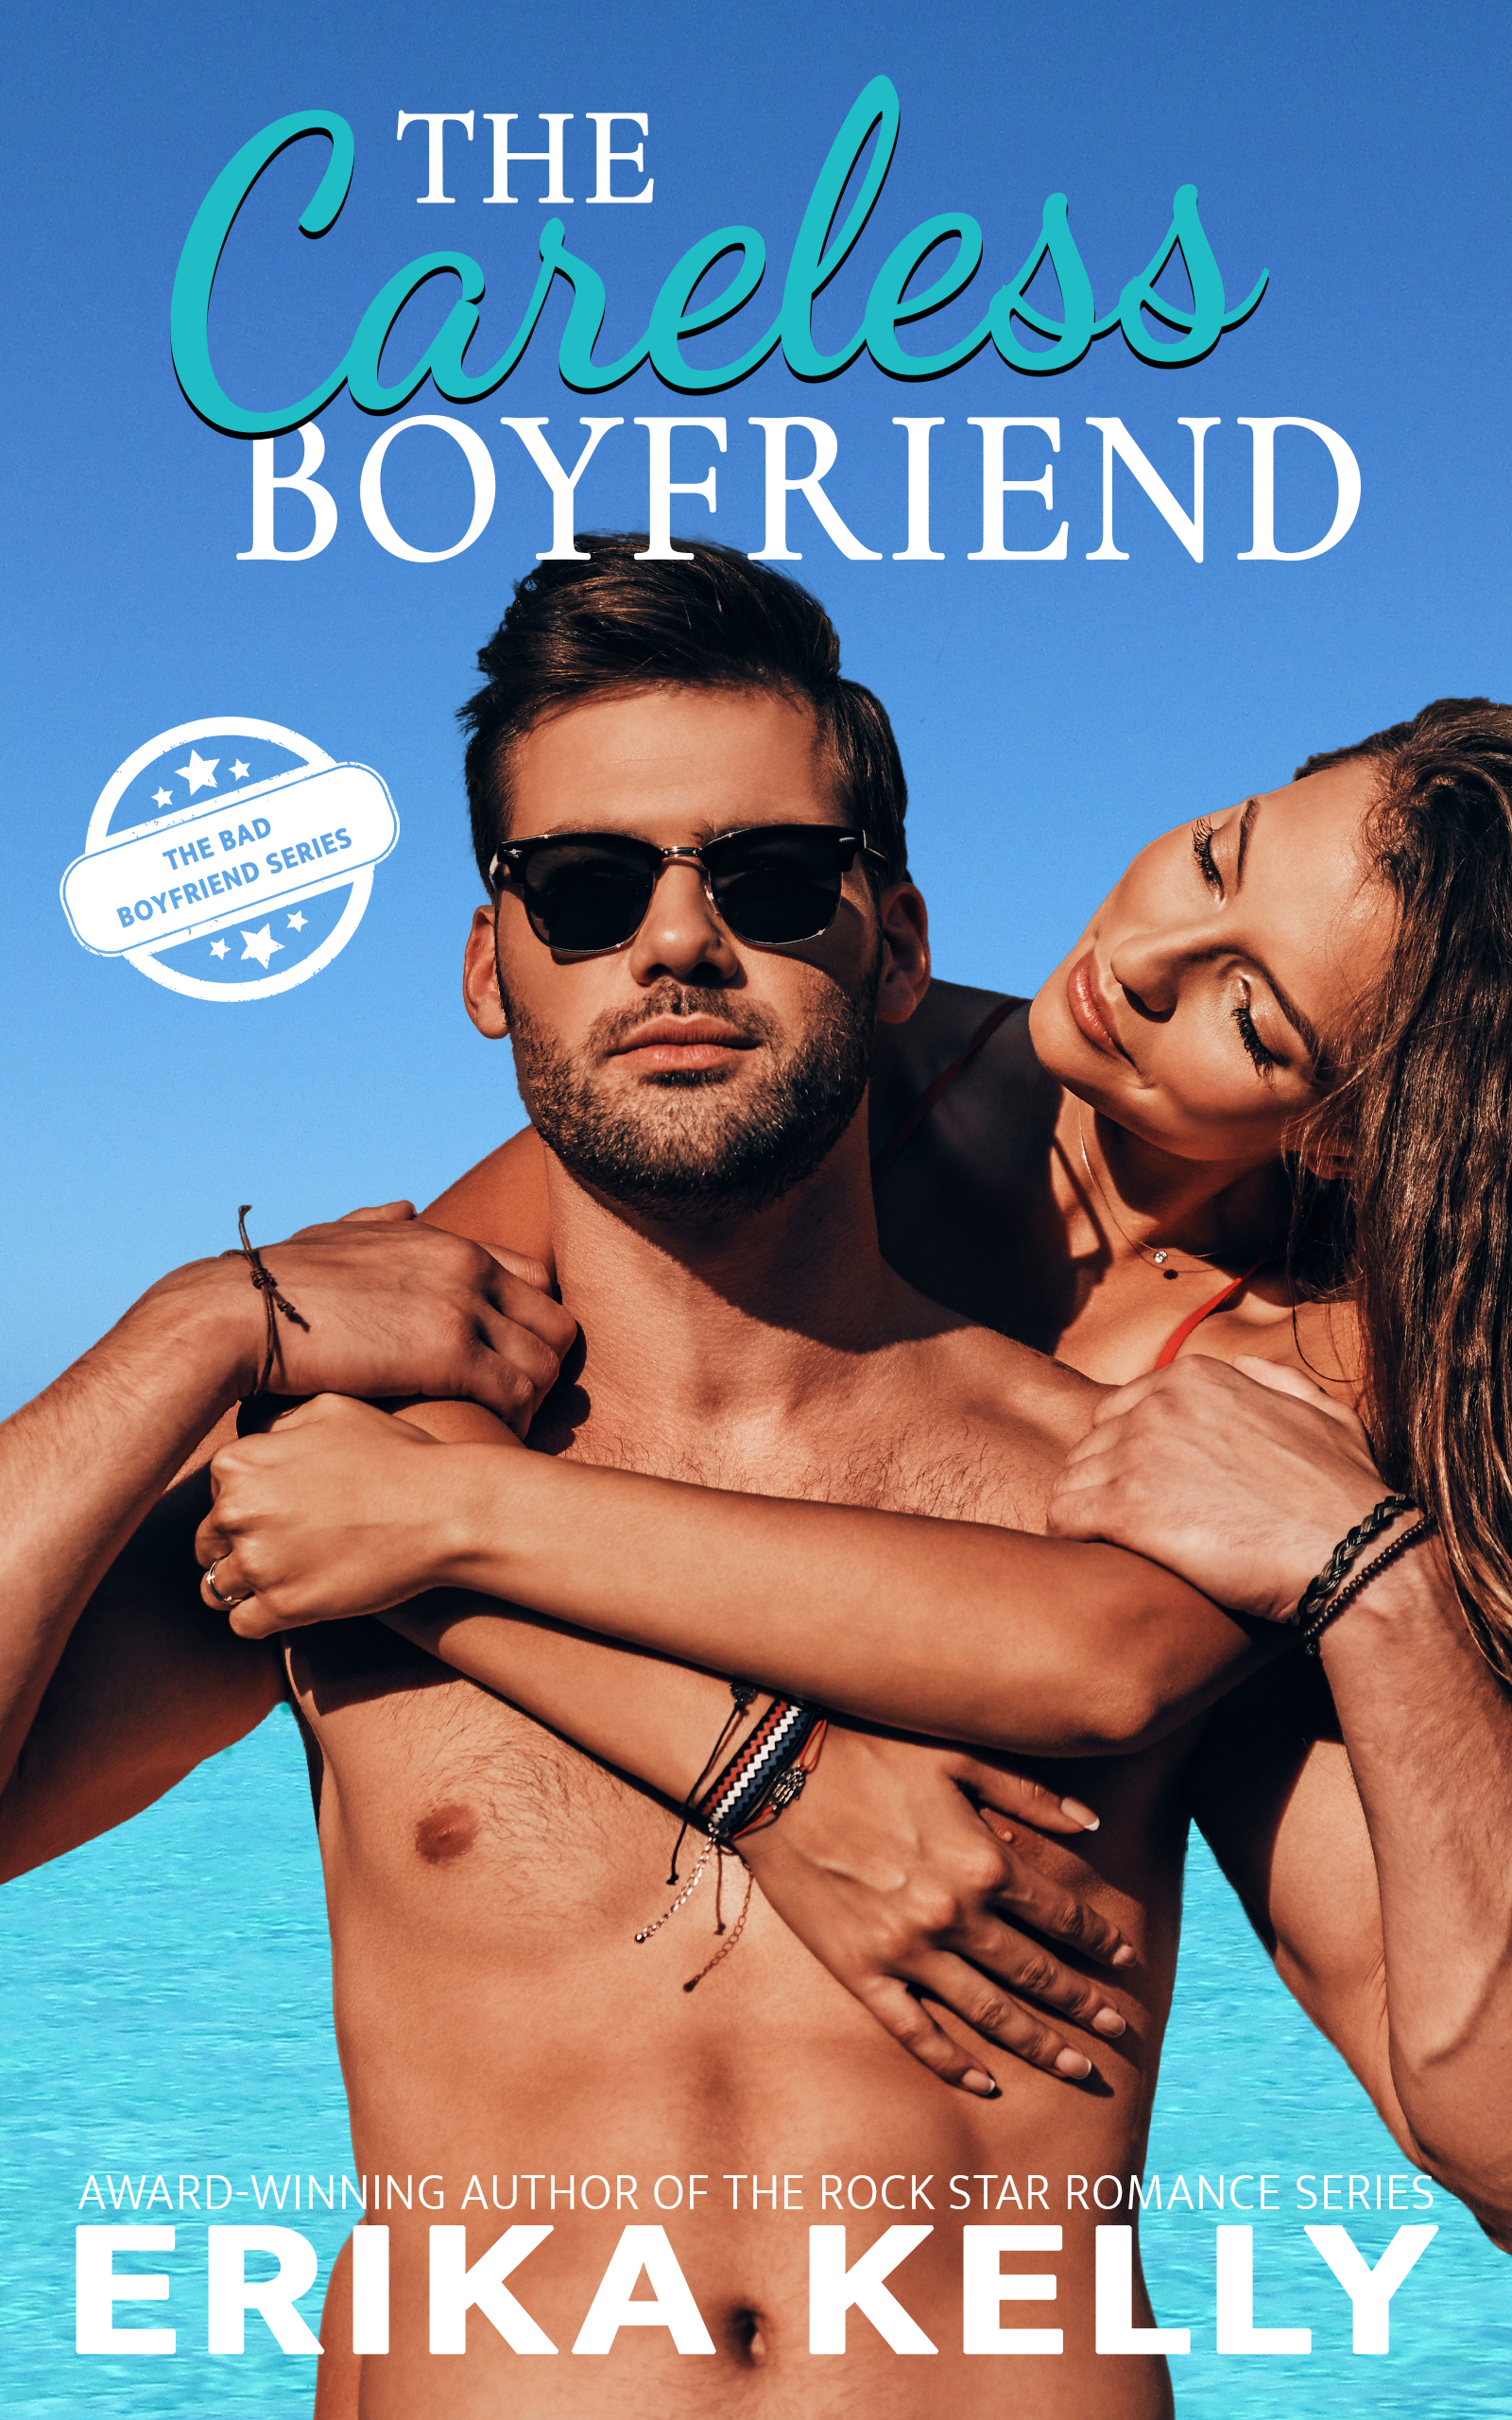 The Careless Boyfriend by Erika Kelly [Review]